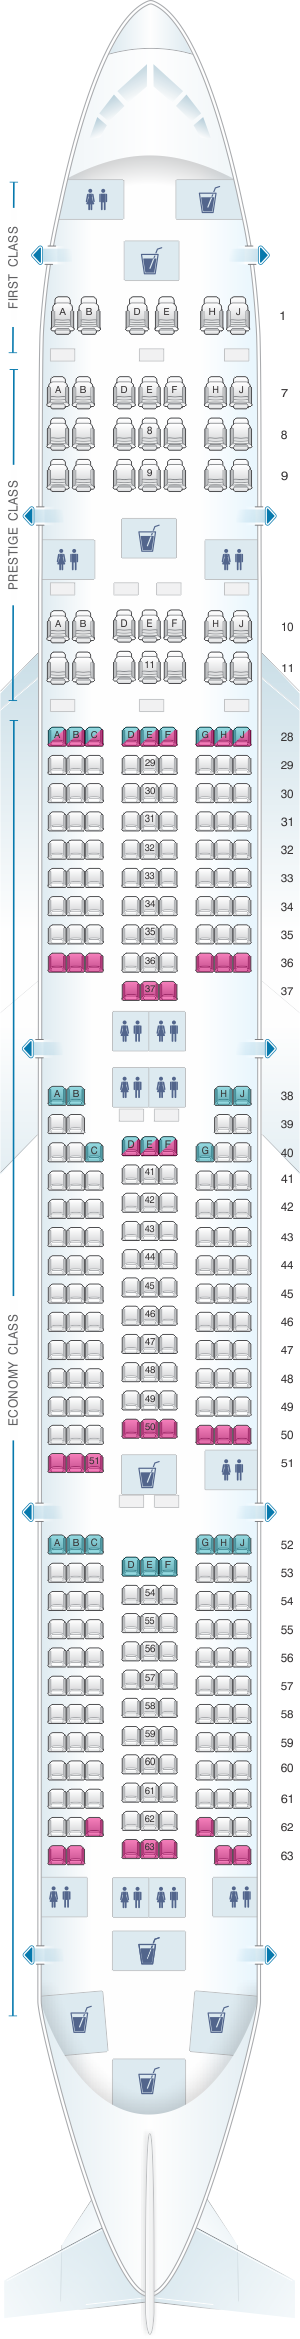 Korean Air B Er Seat Map Sexiz Pix